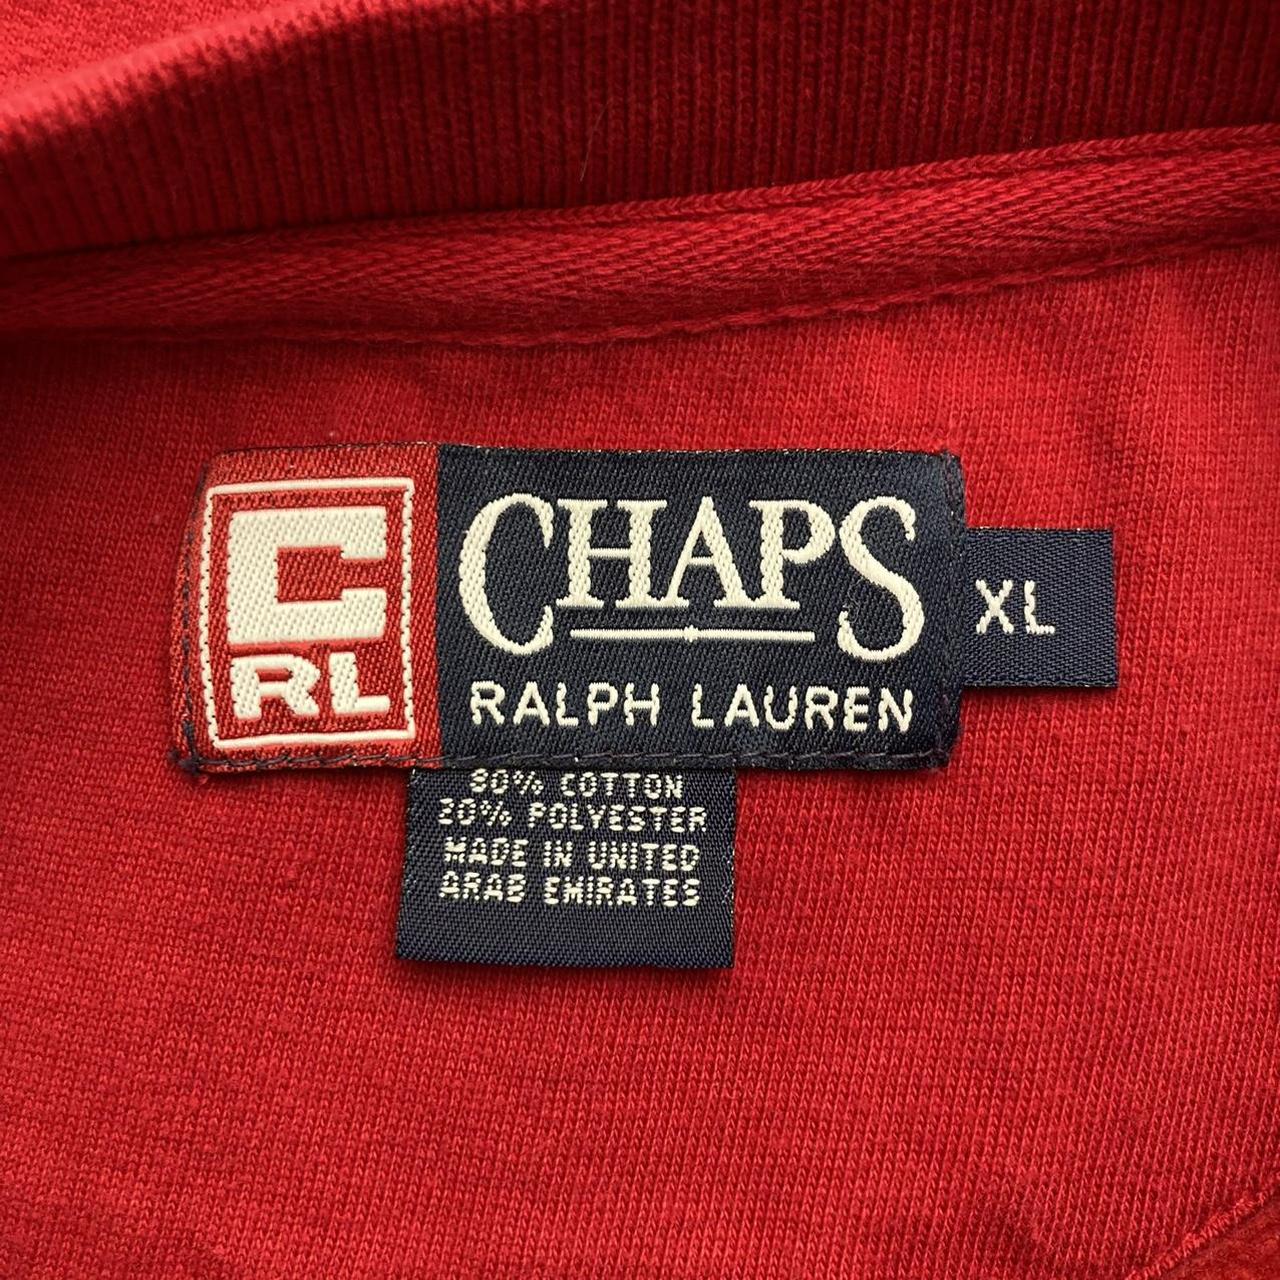 Vintage 90s Chaps Ralph Lauren Athletic Department... - Depop